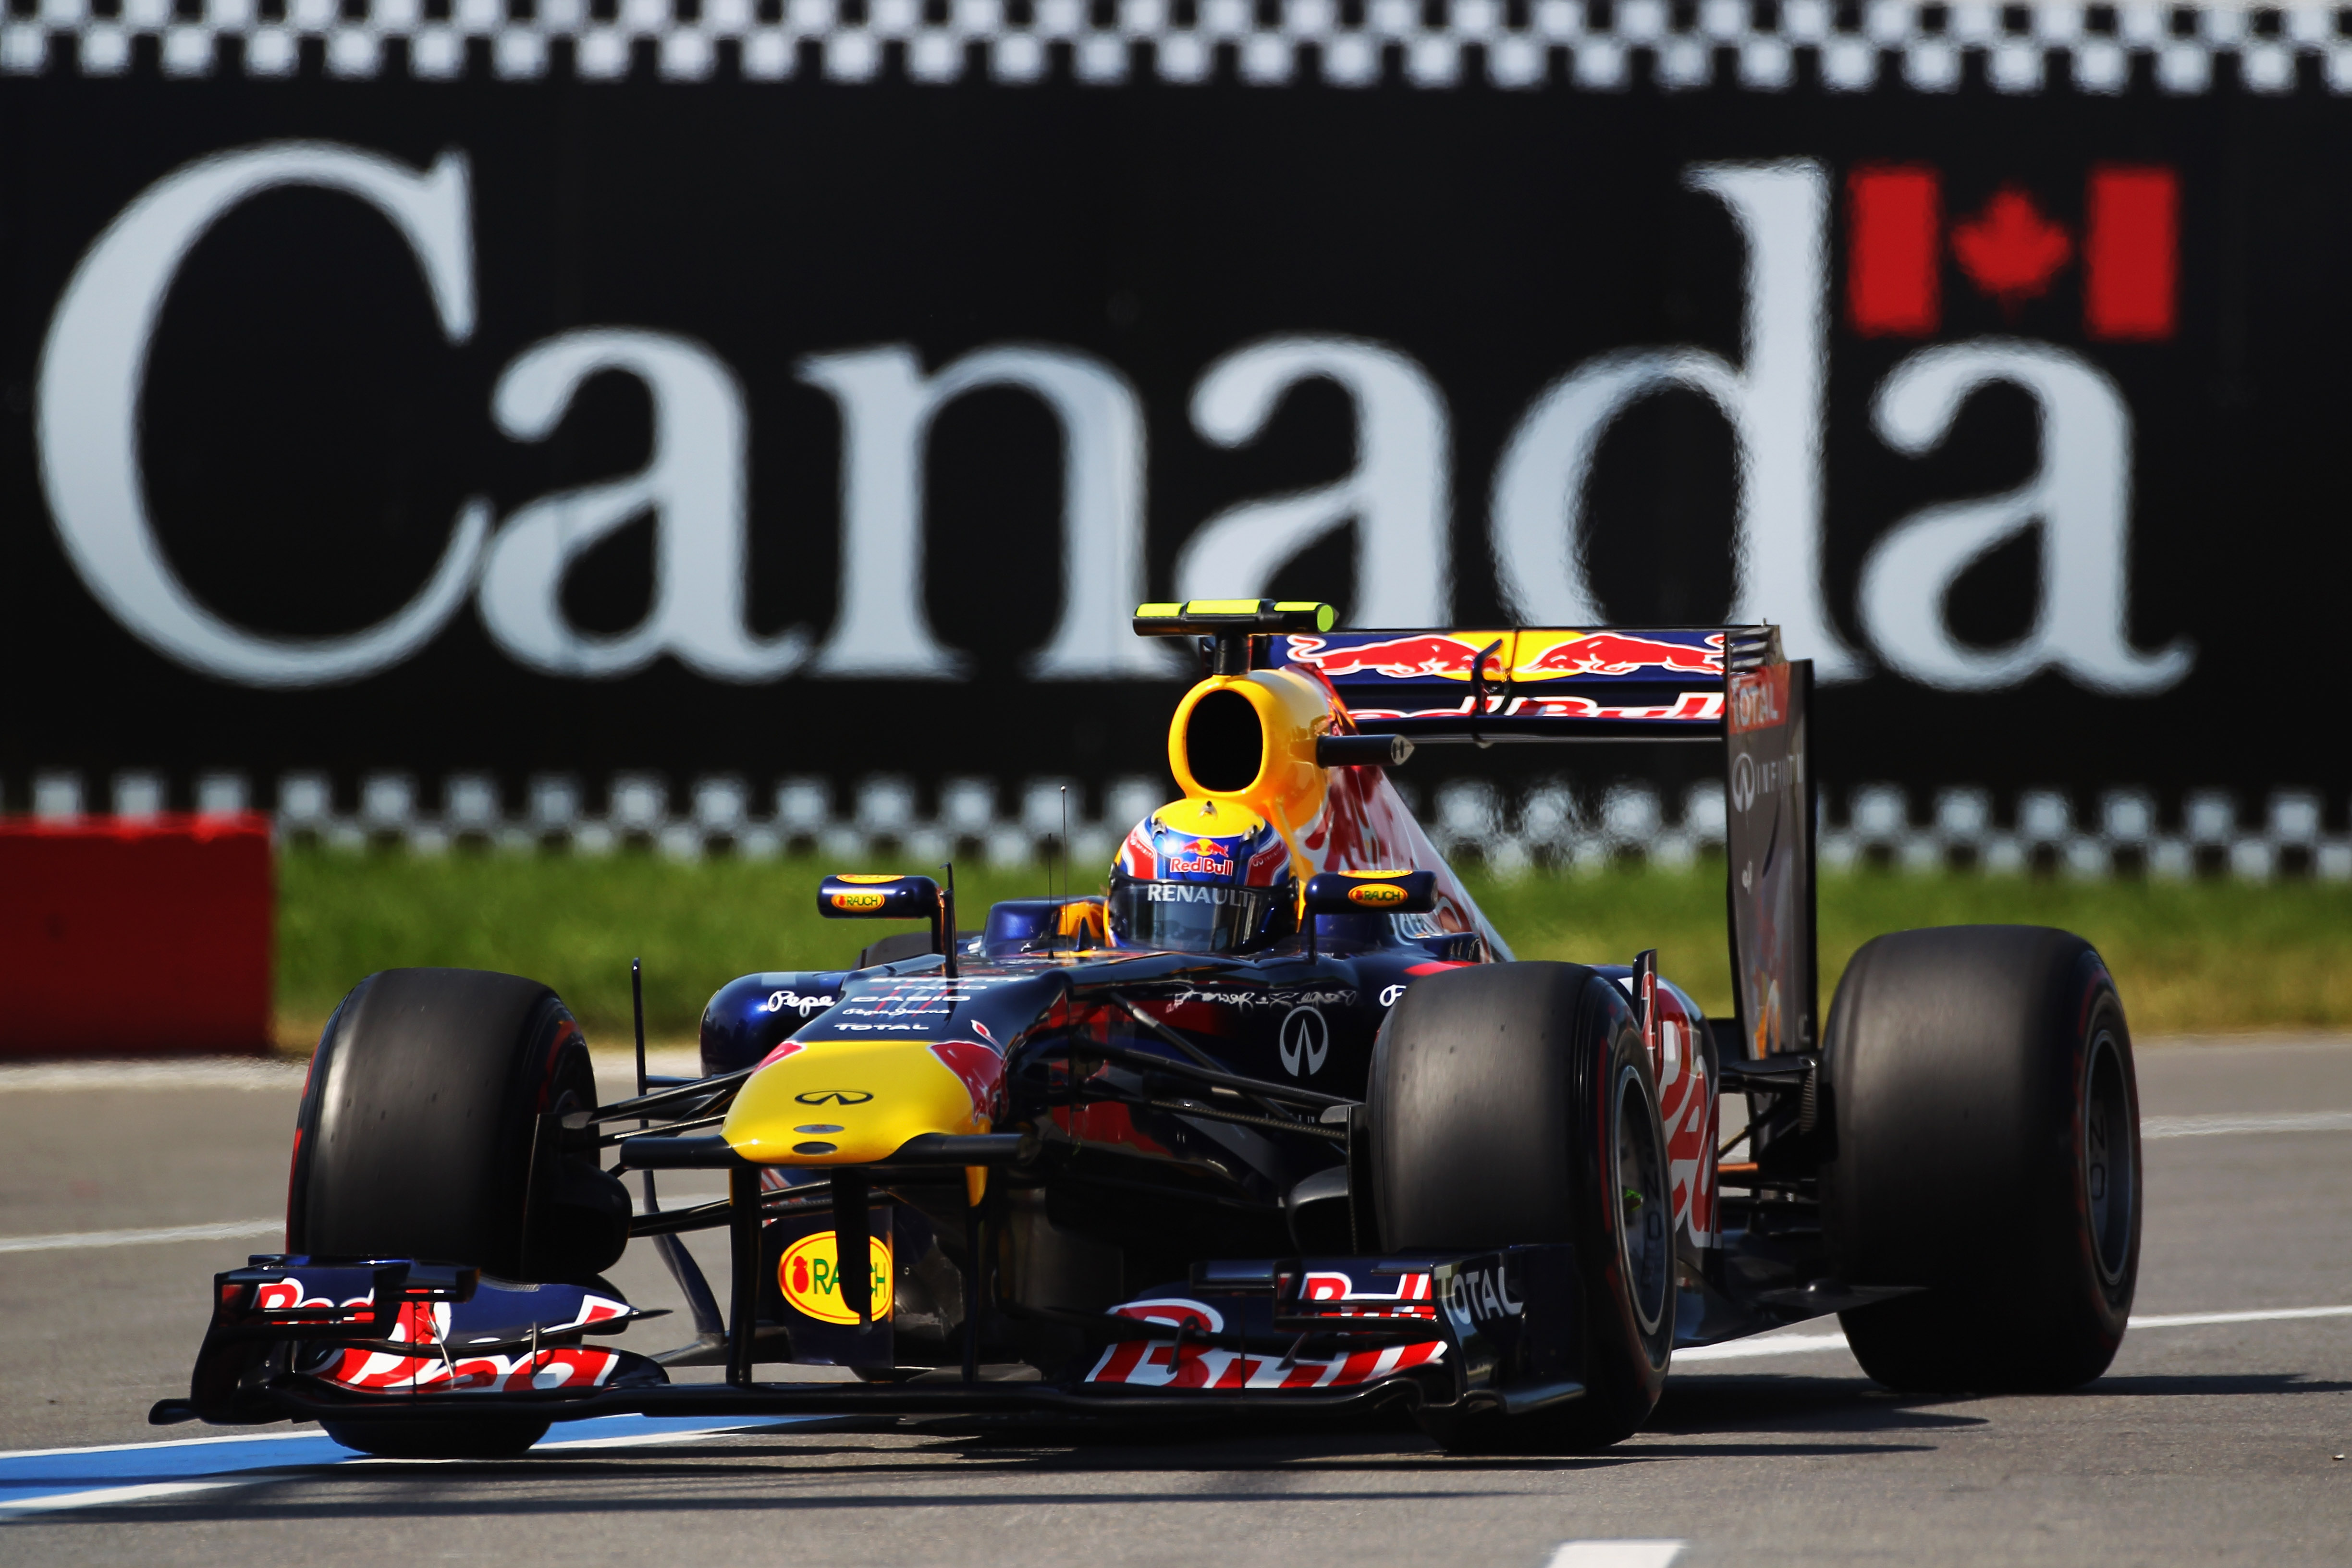 Grand Prix F1 du Canada en direct live dès 20h